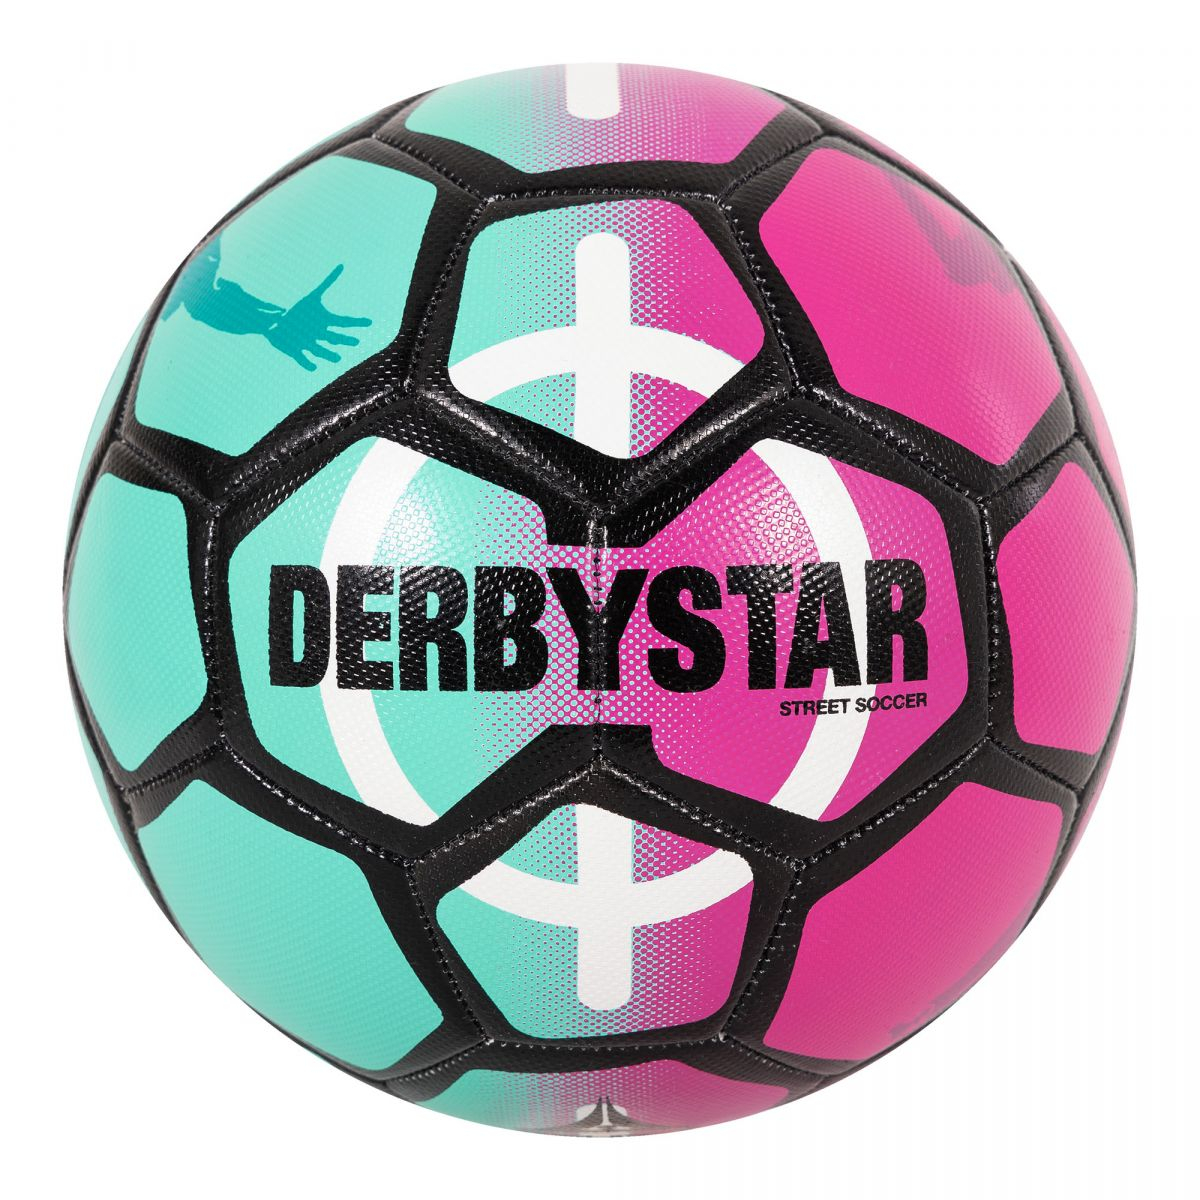 Derby Star Street Soccer voetbal